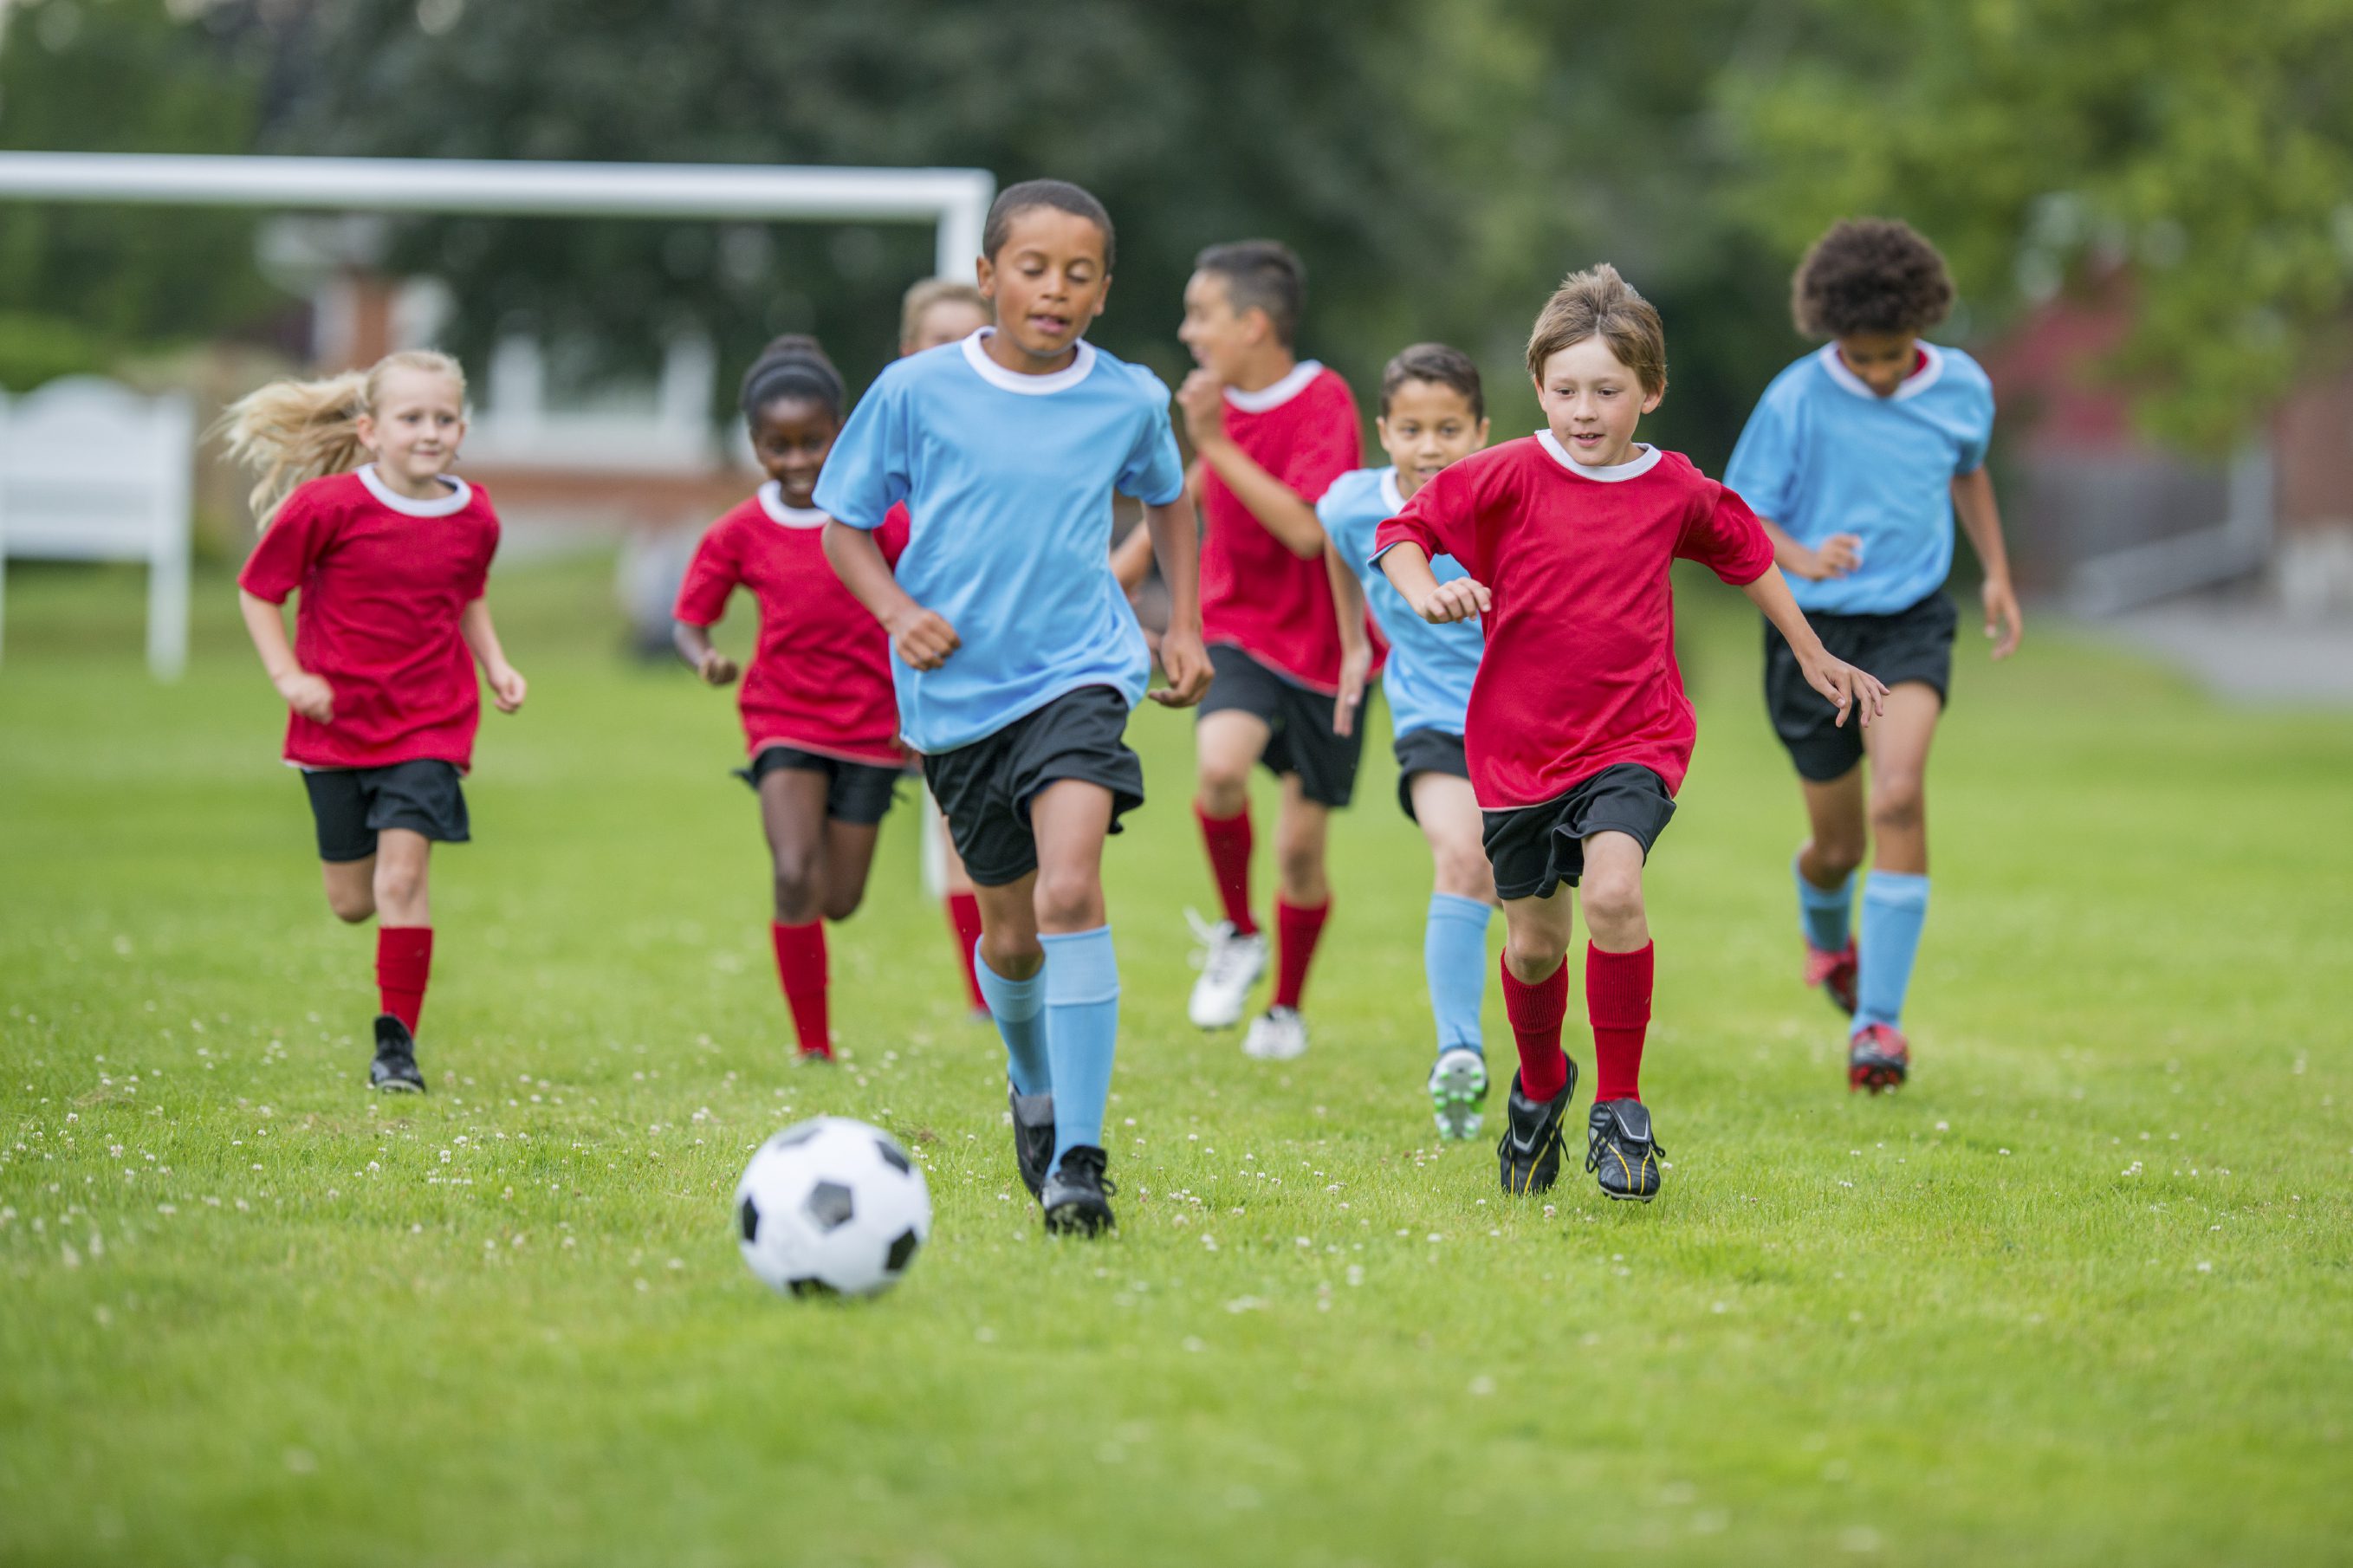 How to play sports. Футбол дети. Спортивные дети. Спорт футбол дети. Играющие дети.